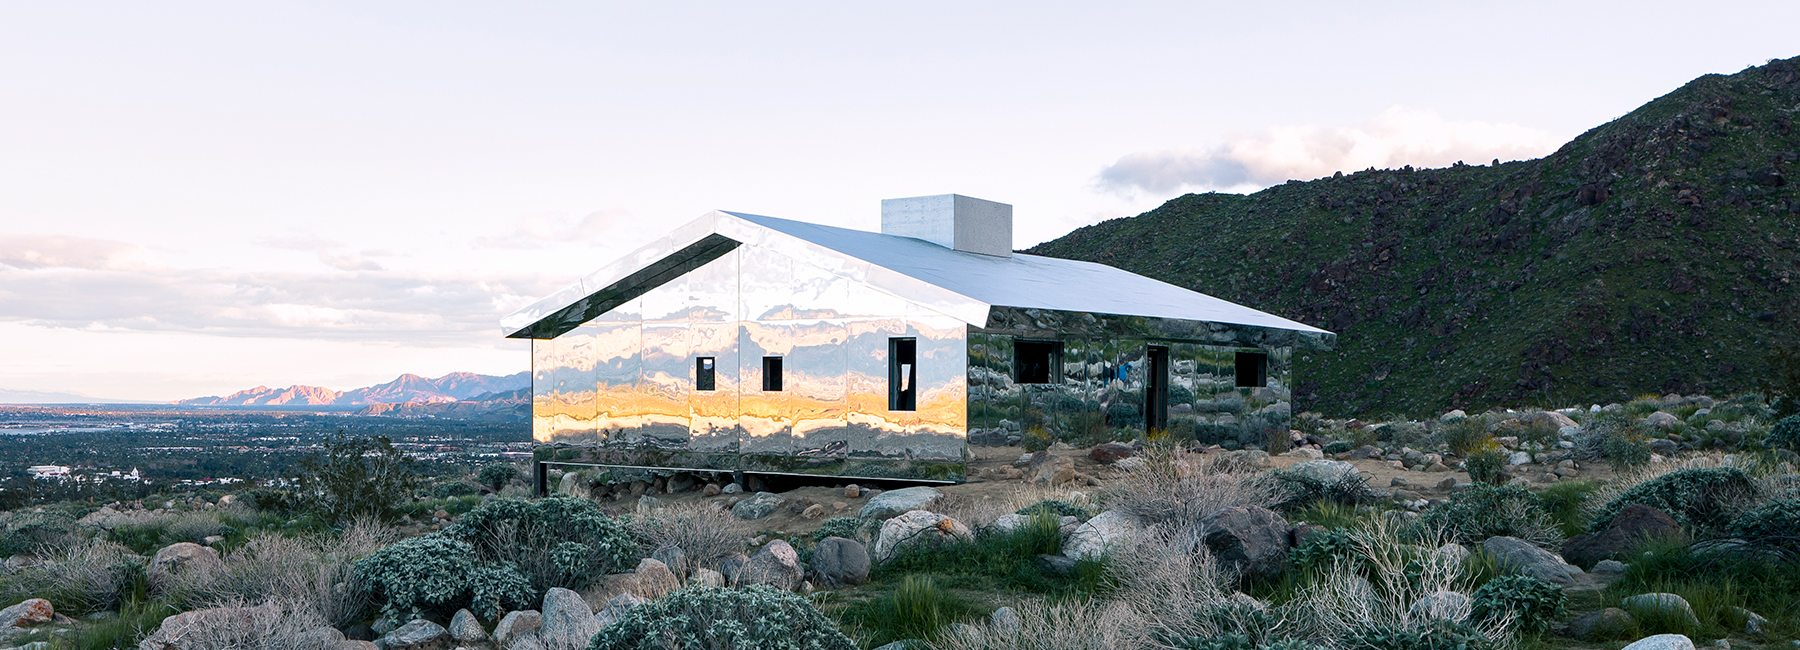 doug aitken creates a mirror-clad 'mirage' in coachella valley's desert landscape